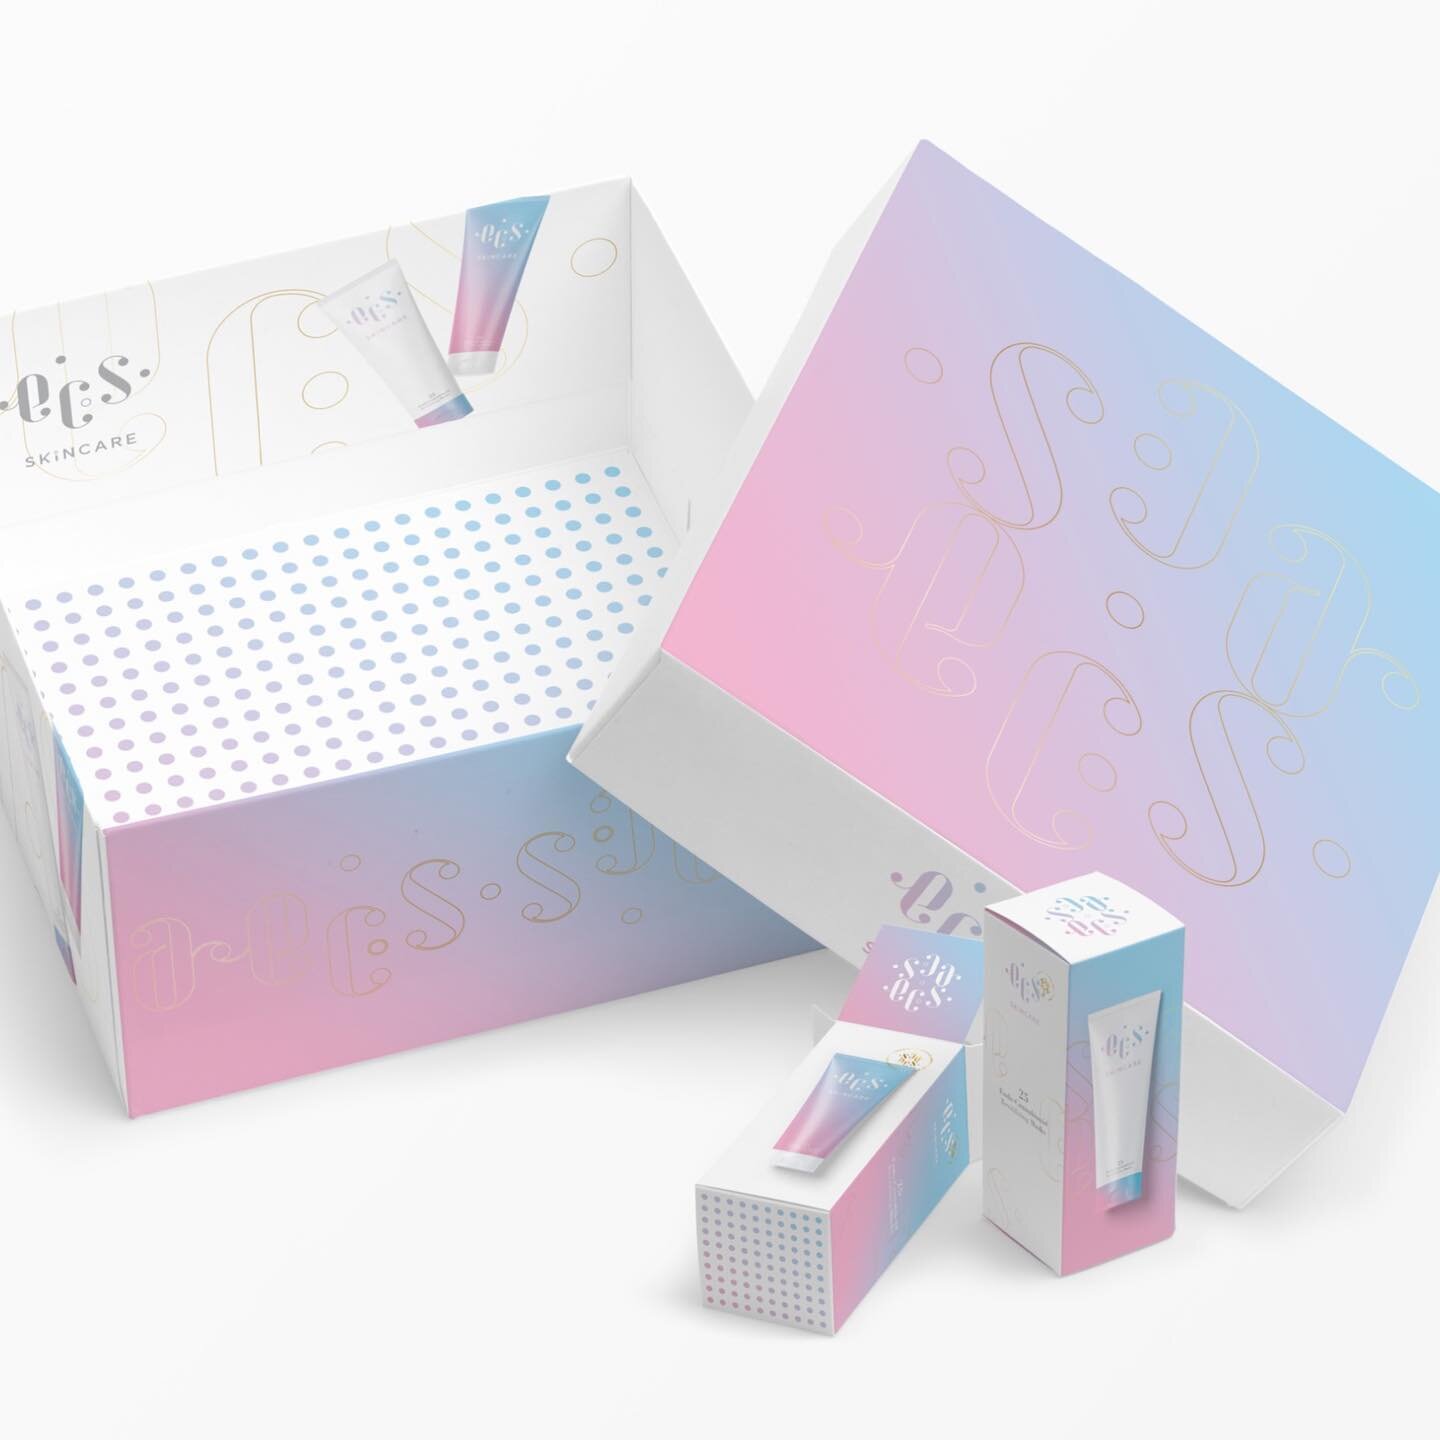 Sneak peek inside our latest branding project 👀 #branddesign #packagingdesign #logos